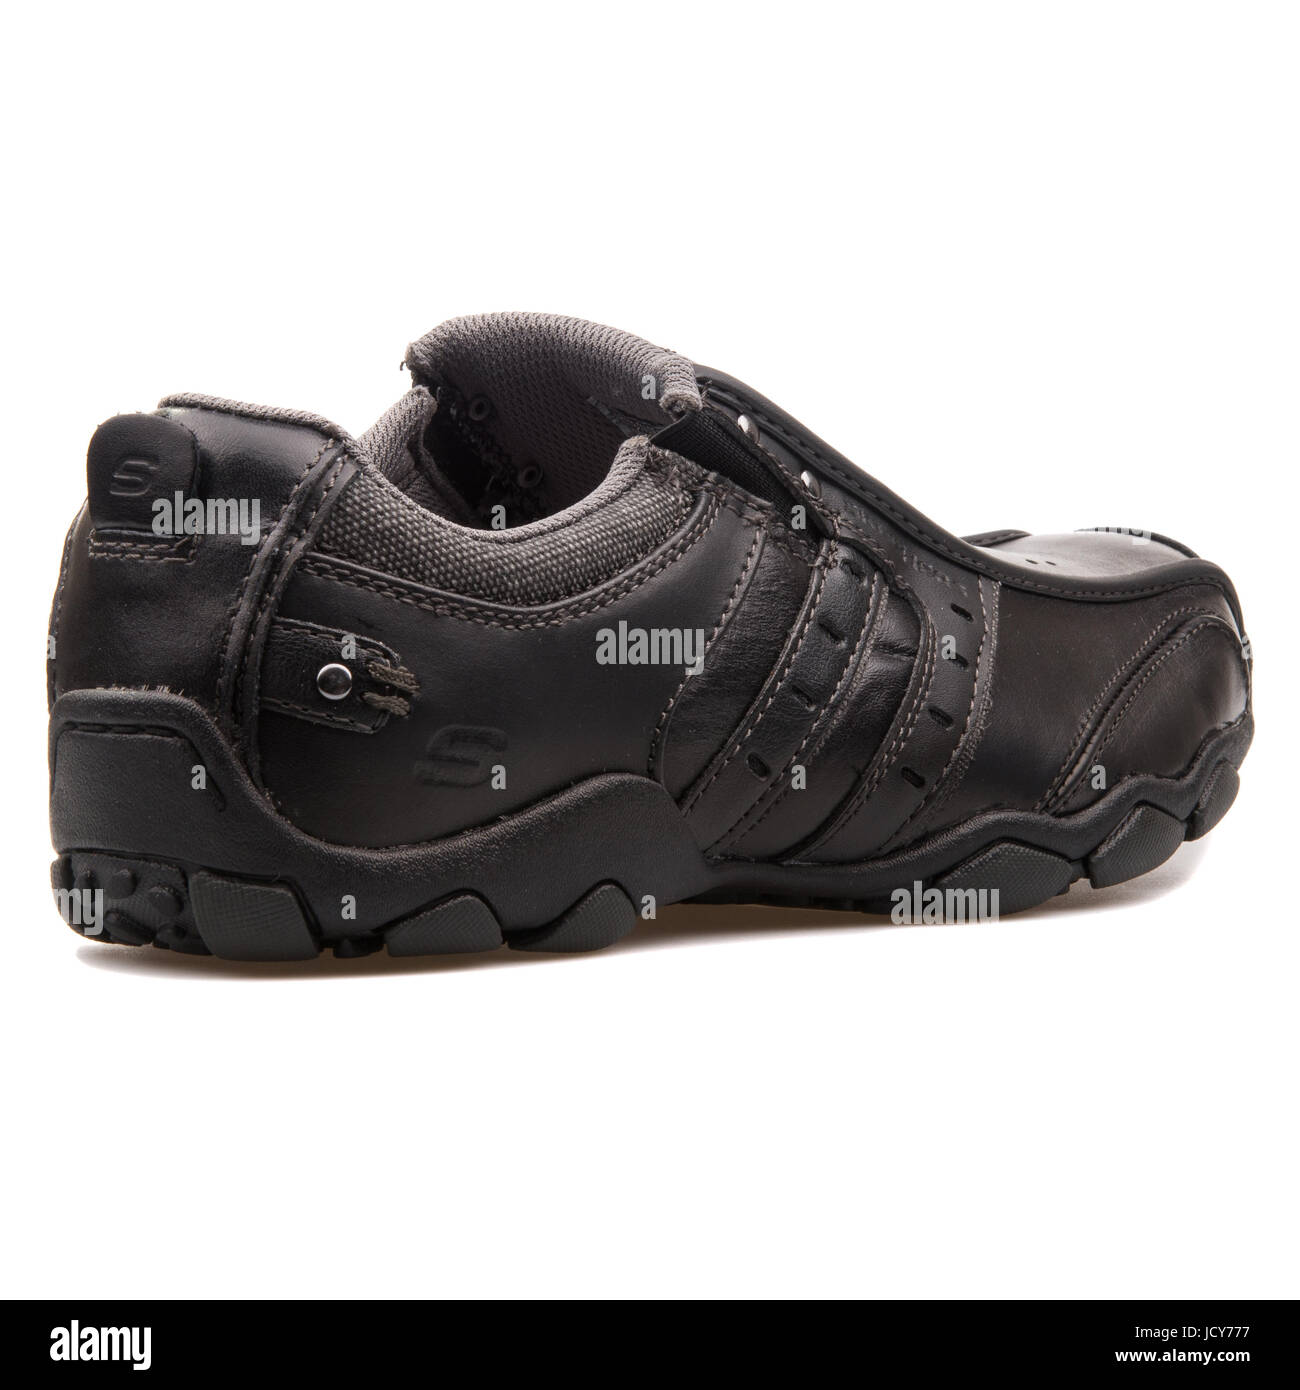 Skechers Diameter Black Leather Shoes - 61779-BLK Stock Photo - Alamy